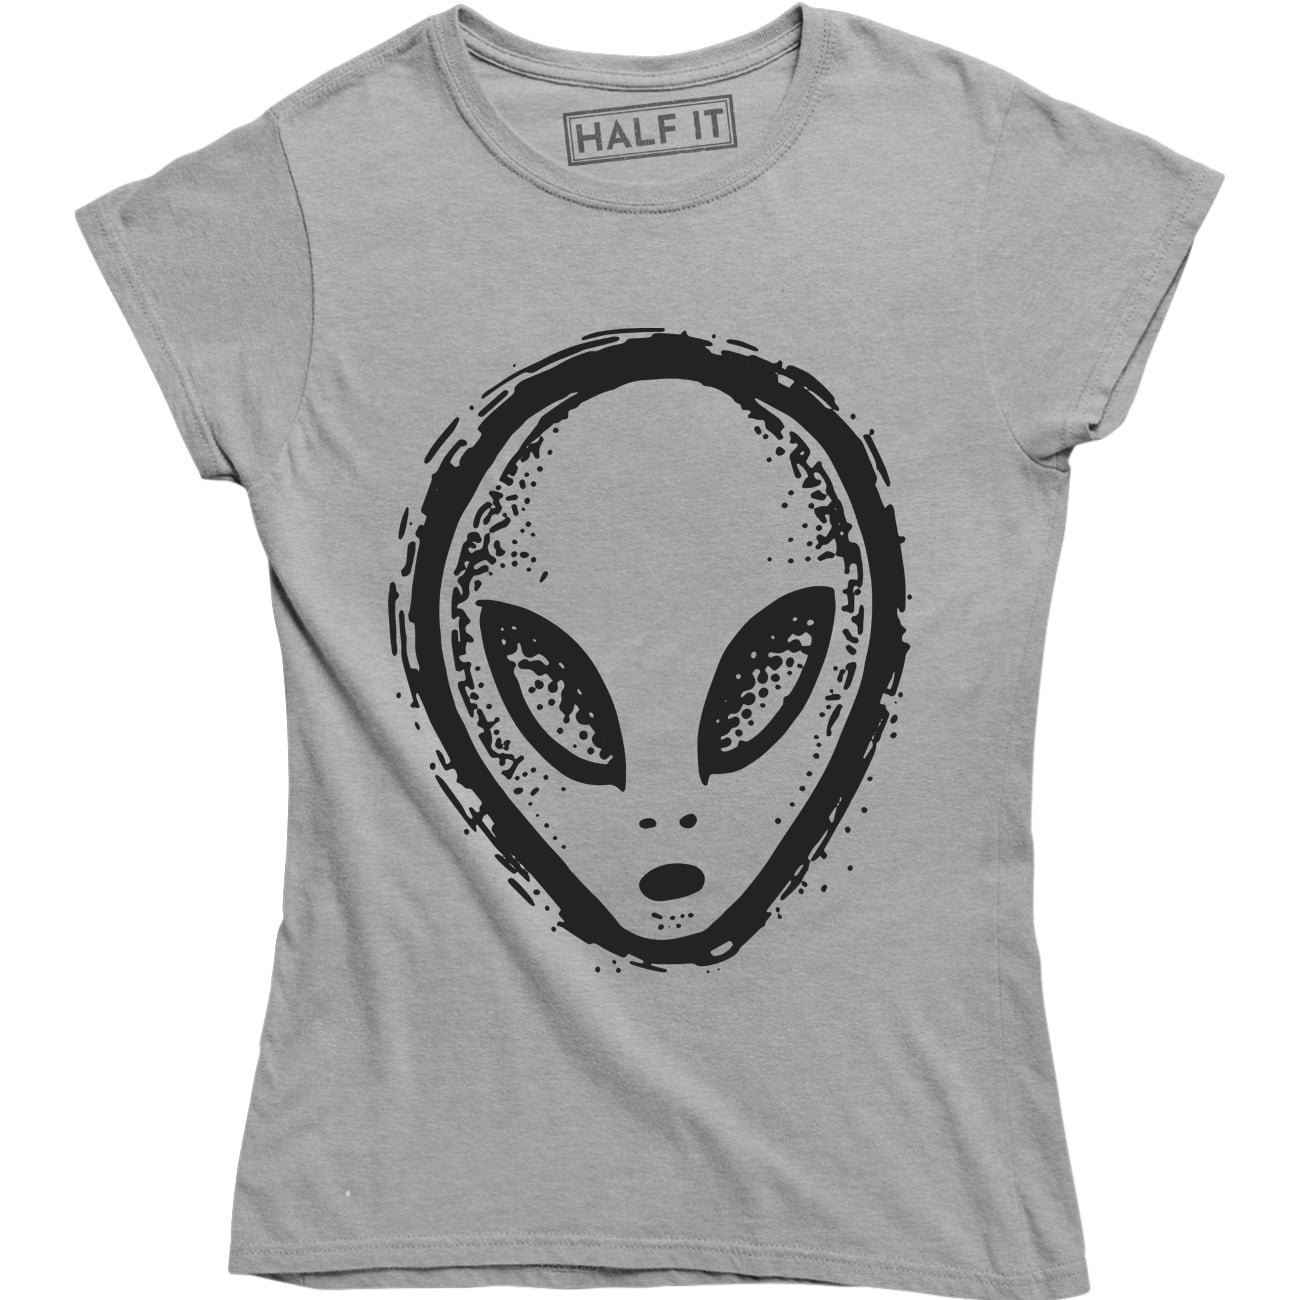 UFO shirt tshirt t shirt tee Alien Graphic Design shirt Space Galaxy Funny Area 51 I Want to Believe Illustration Unisex shirt Gift idea